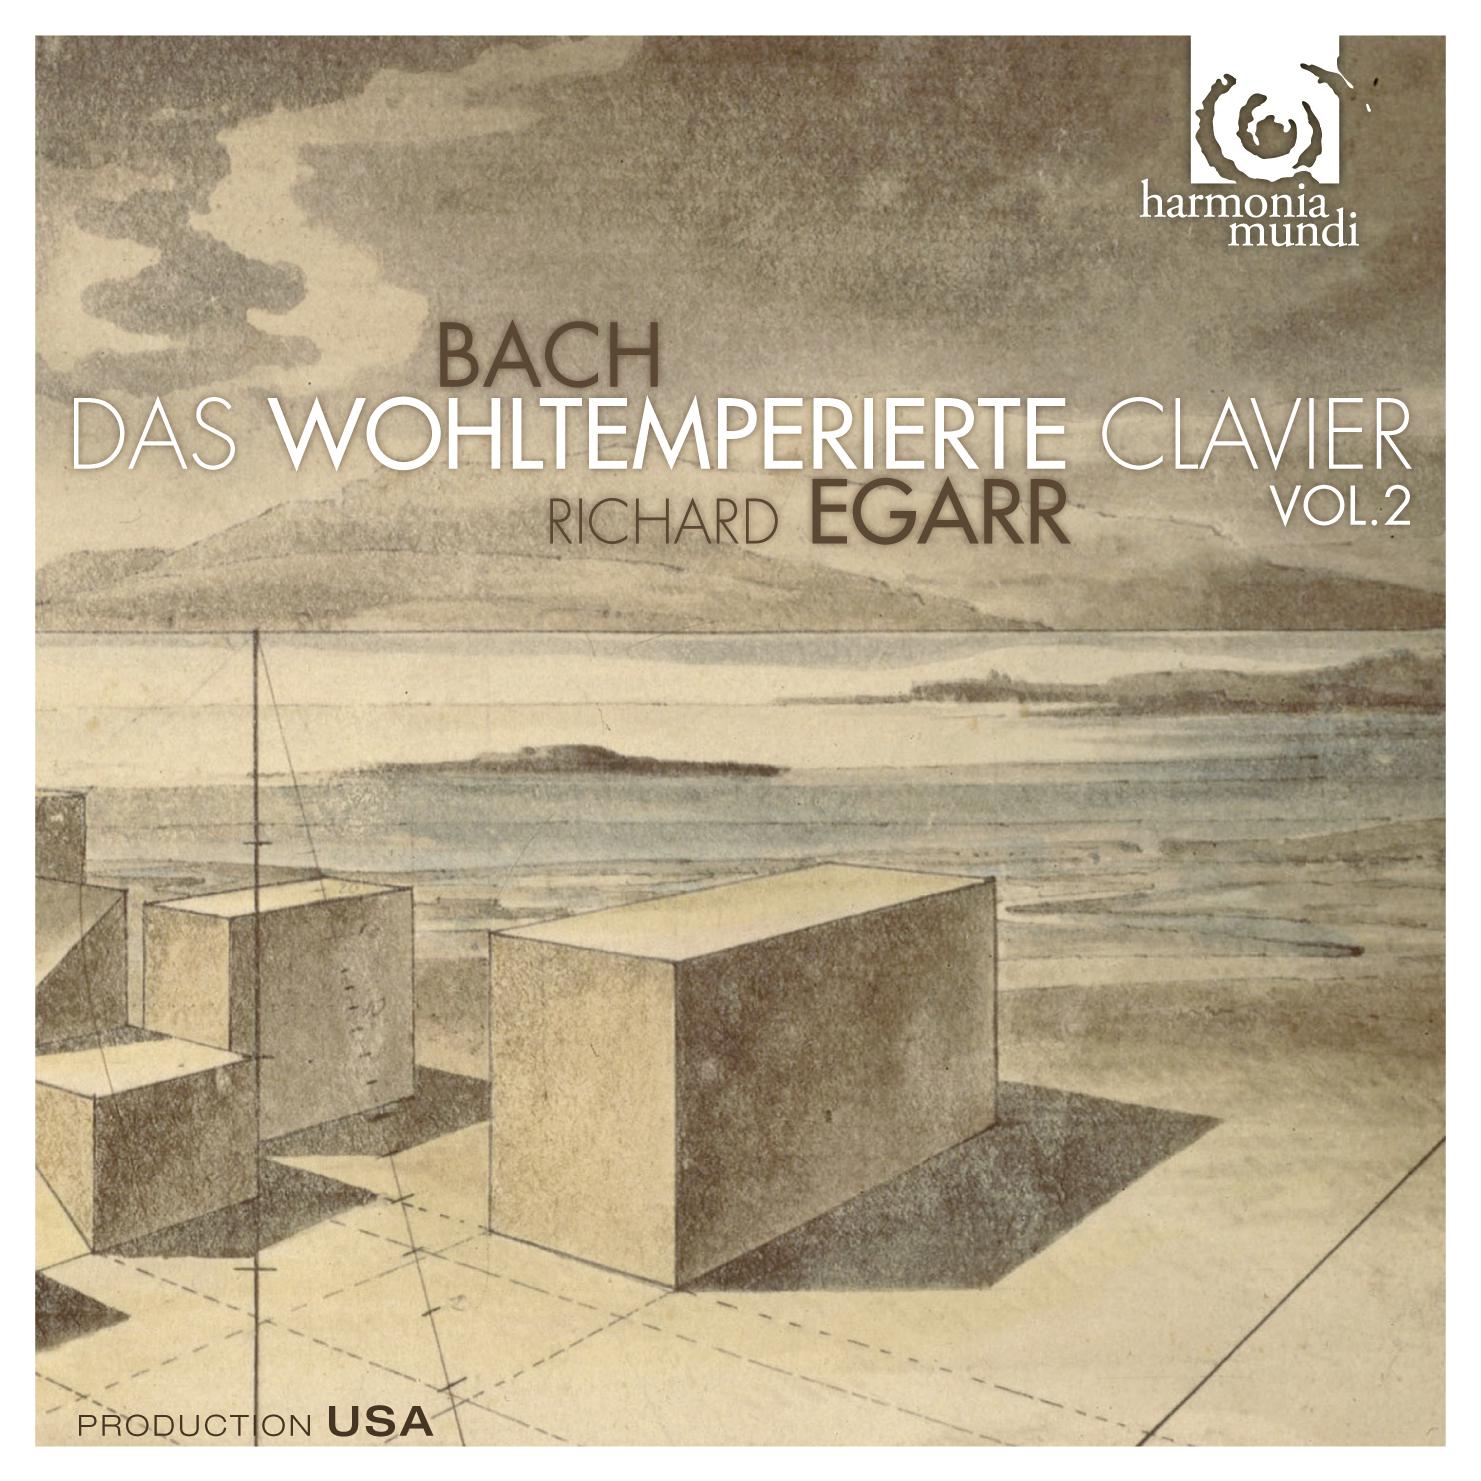 Well-Tempered Clavier, Book II, BWV 870-893: Prelude XXI in B-Flat Major, BWV 890